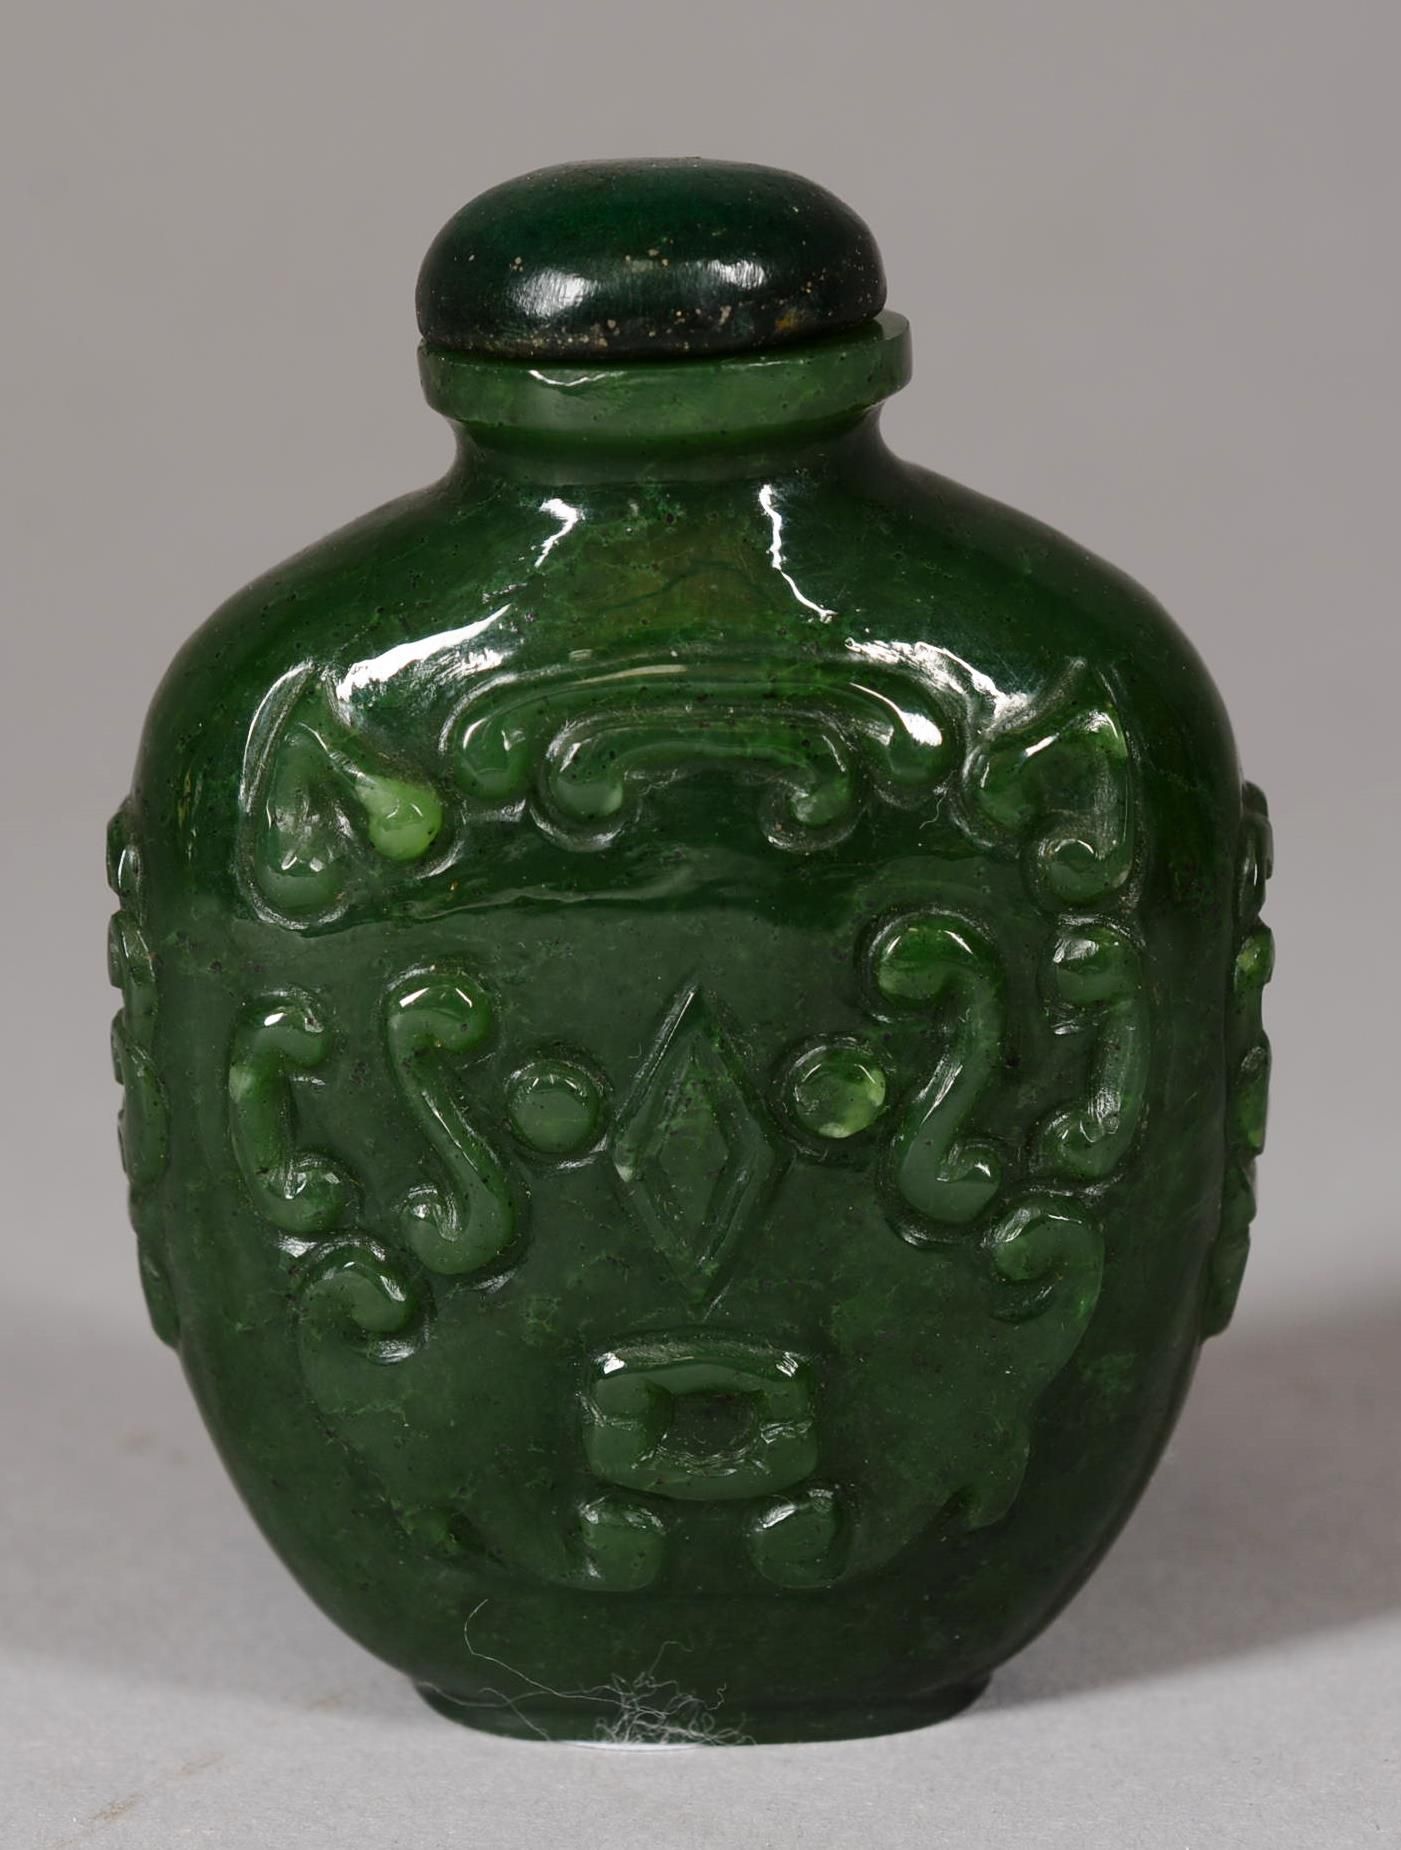 Flacon tabatière à priser en jade CHINE.

Flacon tabatière à priser en jade scul&hellip;